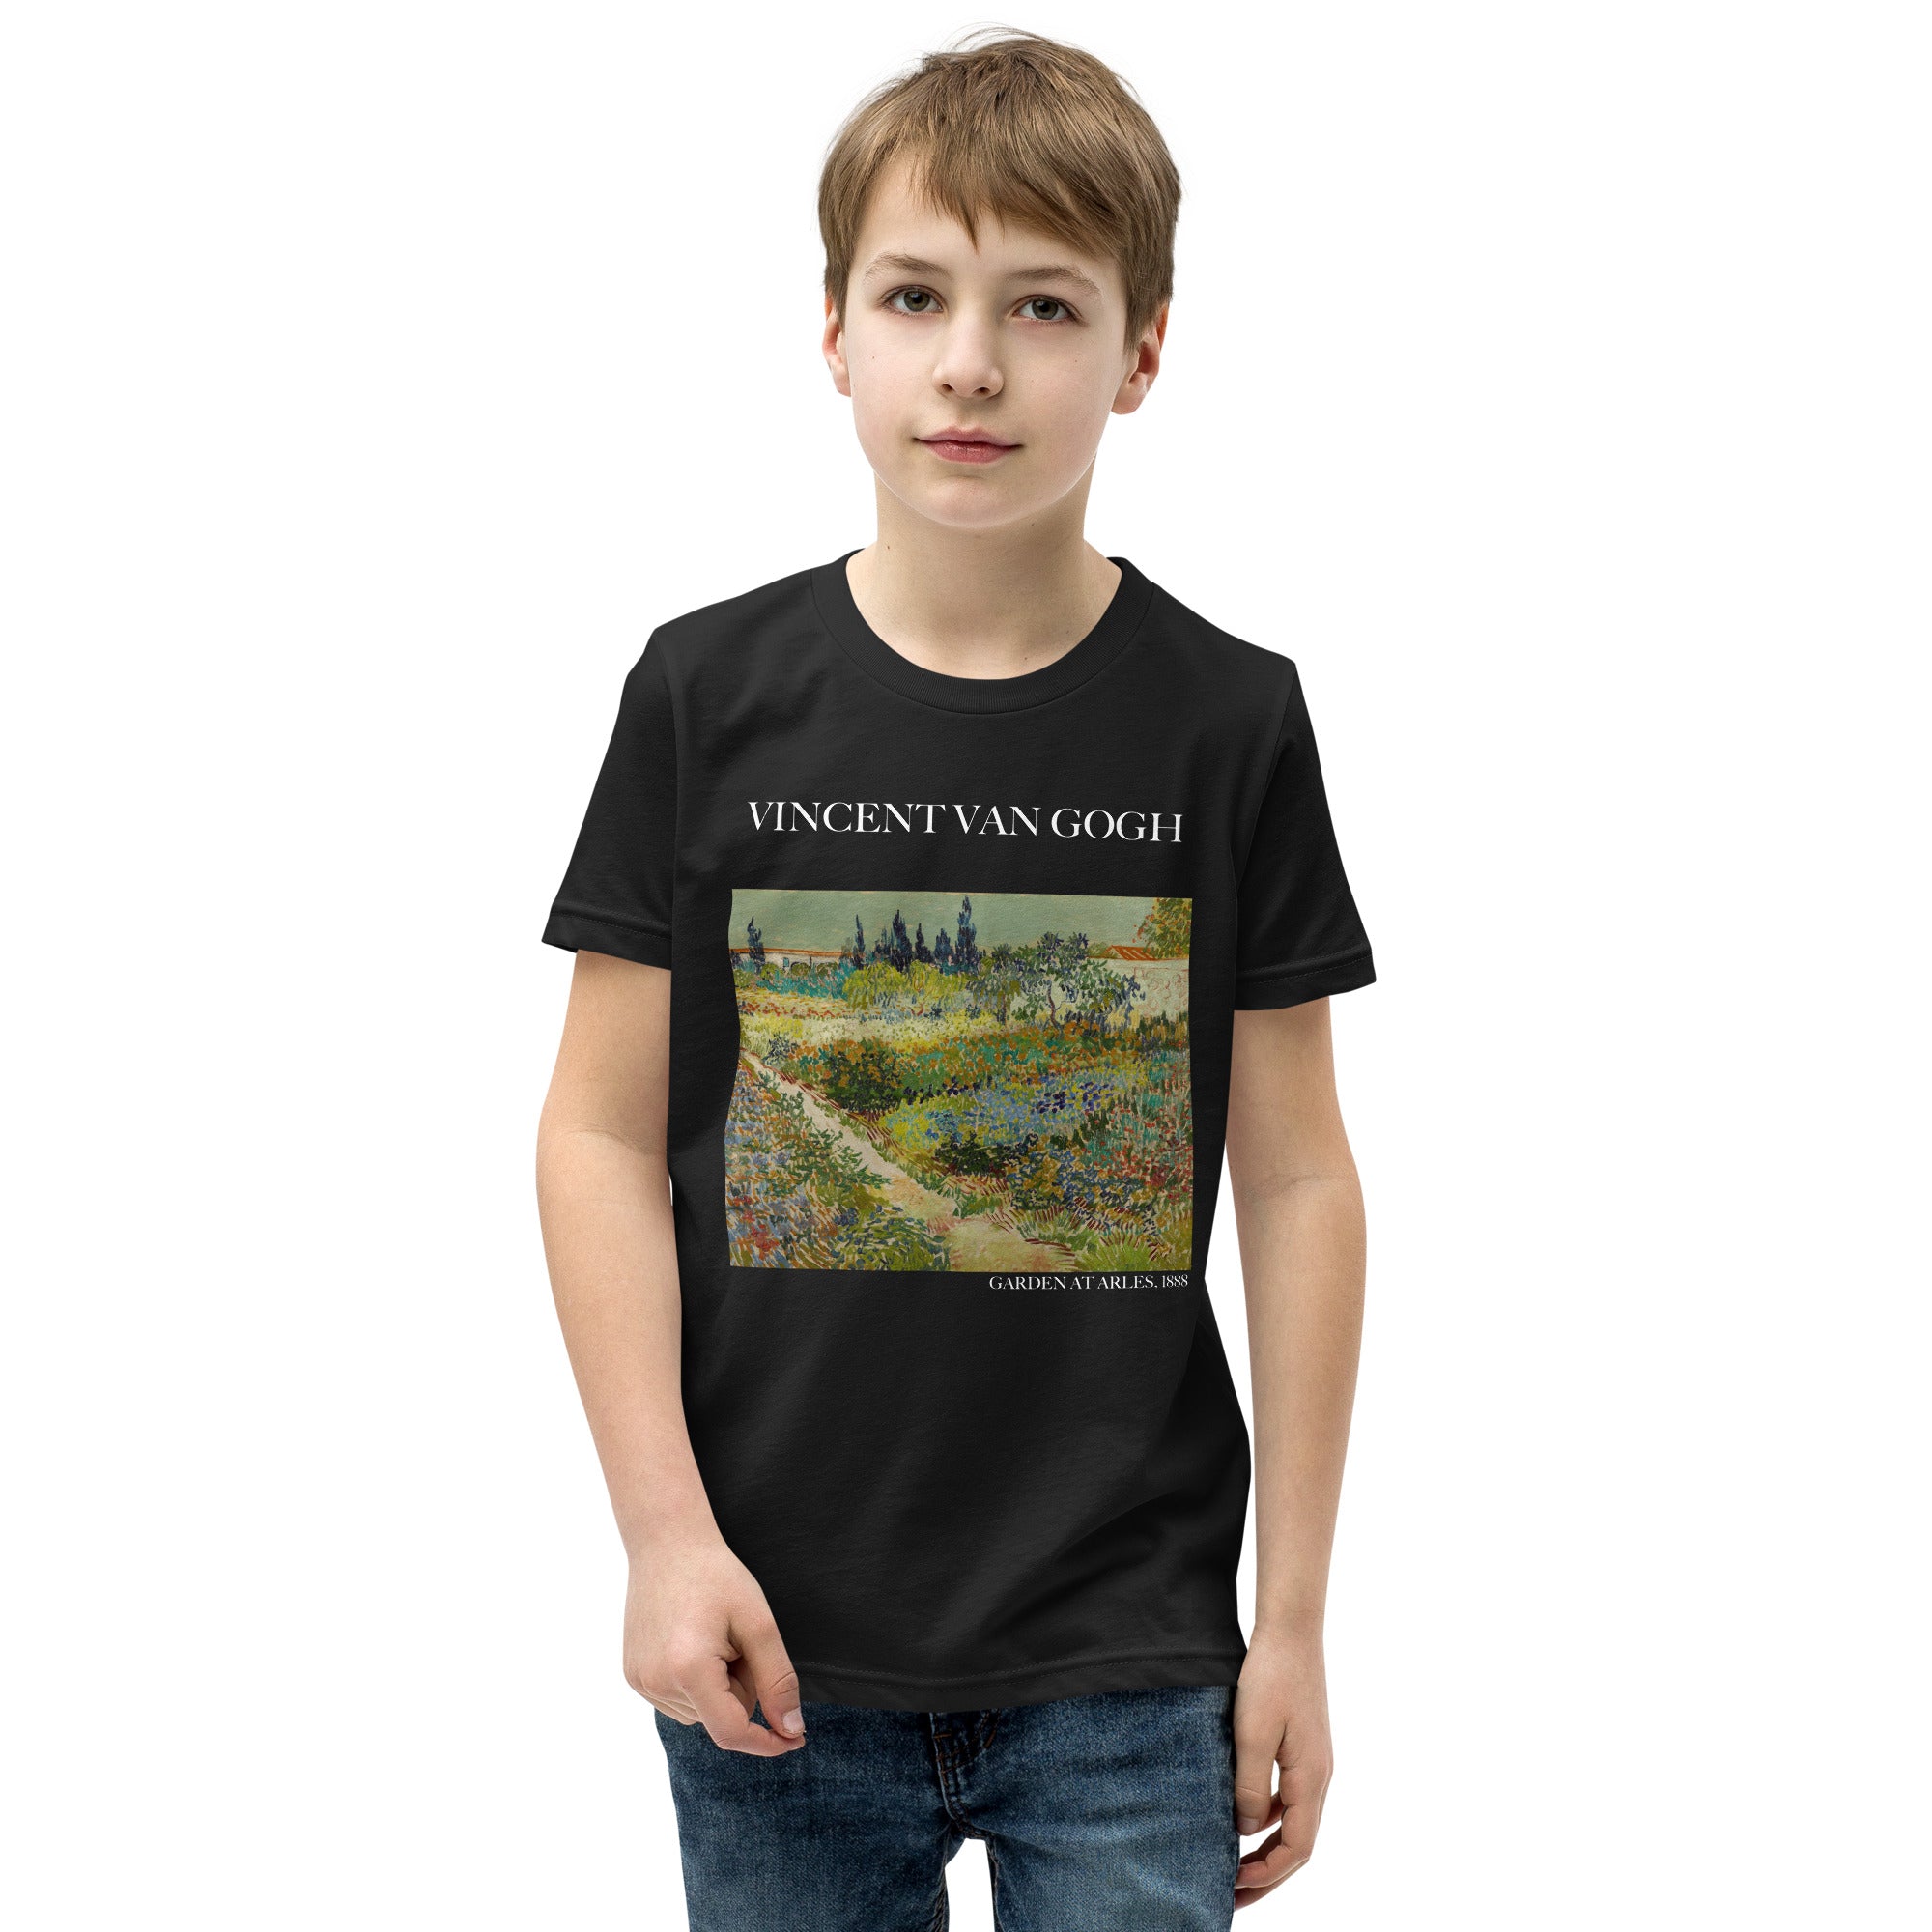 Vincent van Gogh 'Garden at Arles' Famous Painting Short Sleeve T-Shirt | Premium Youth Art Tee